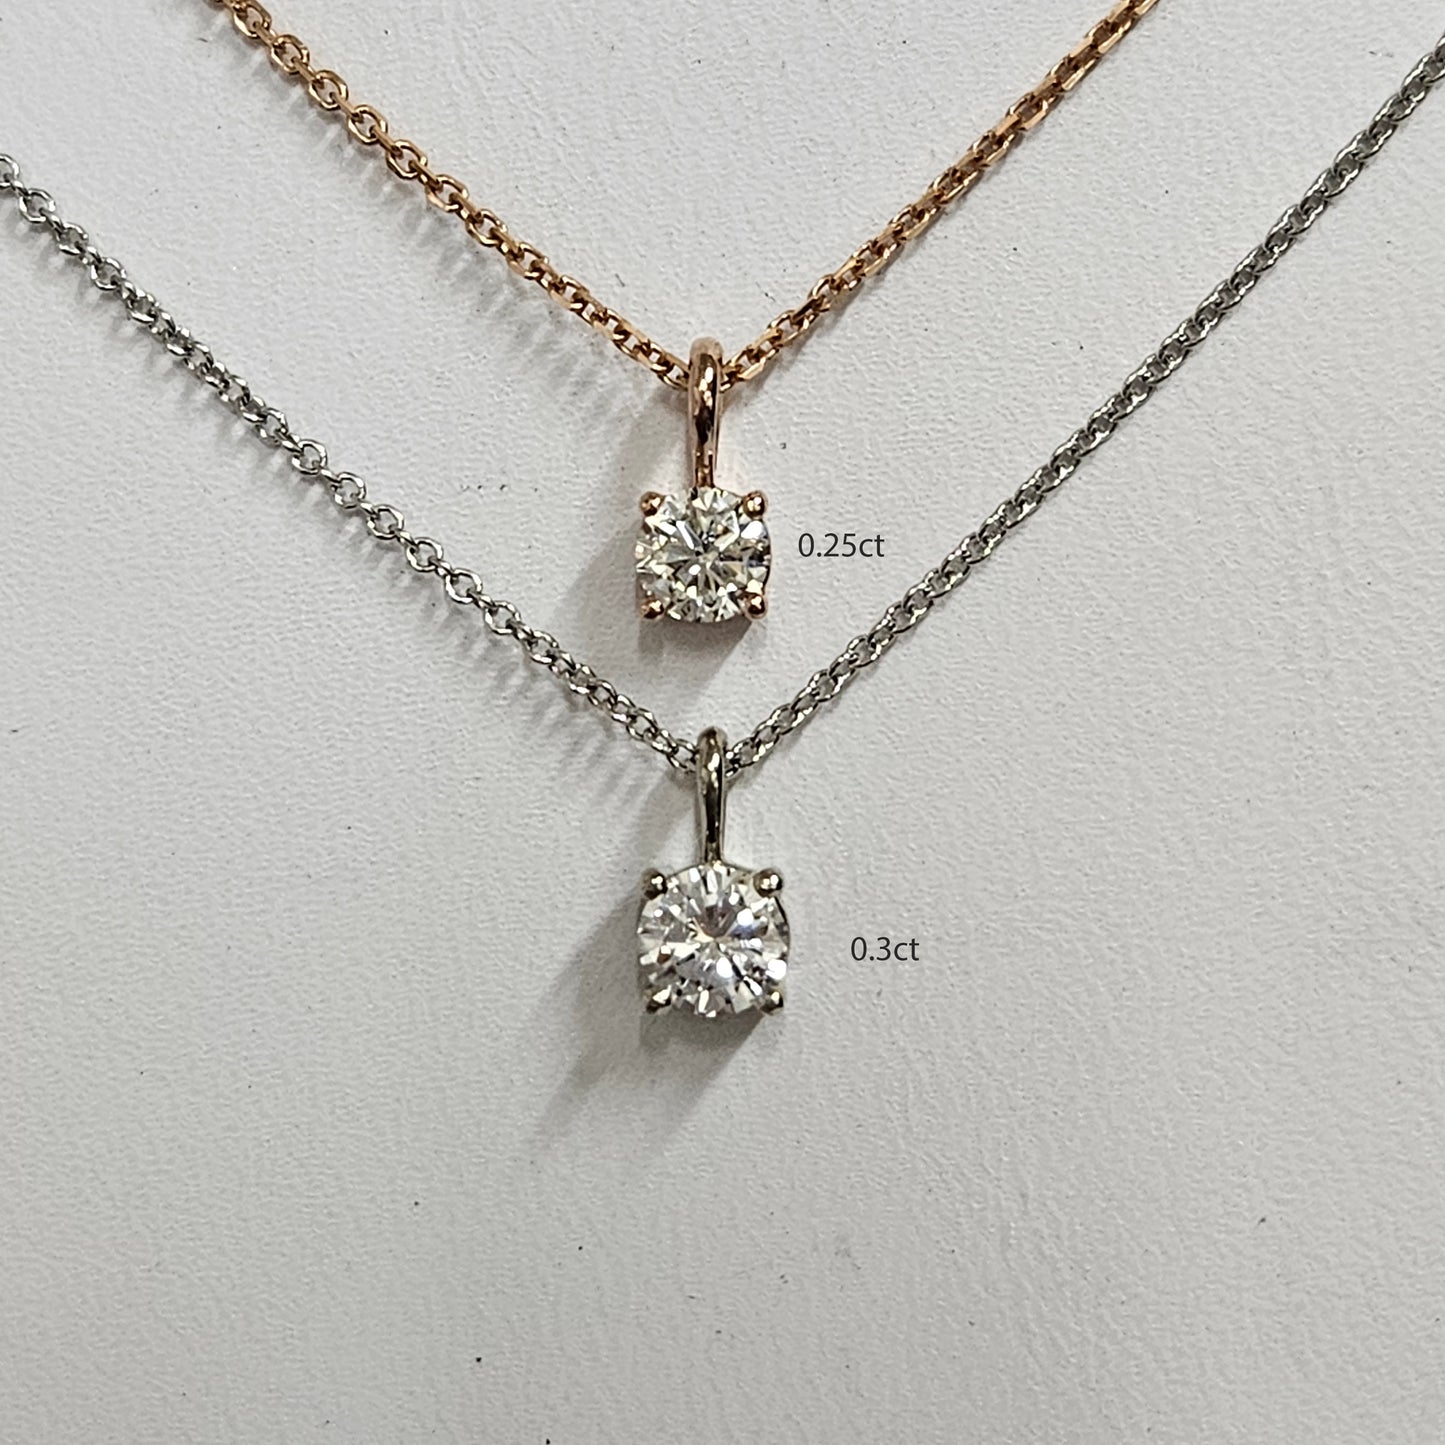 0.25ct Diamond Pendant/Diamond Solitaire Pendant/Solitaire 4 Prong Diamond Pendant/Solitaire Diamond Pendant/Anniversary Gift